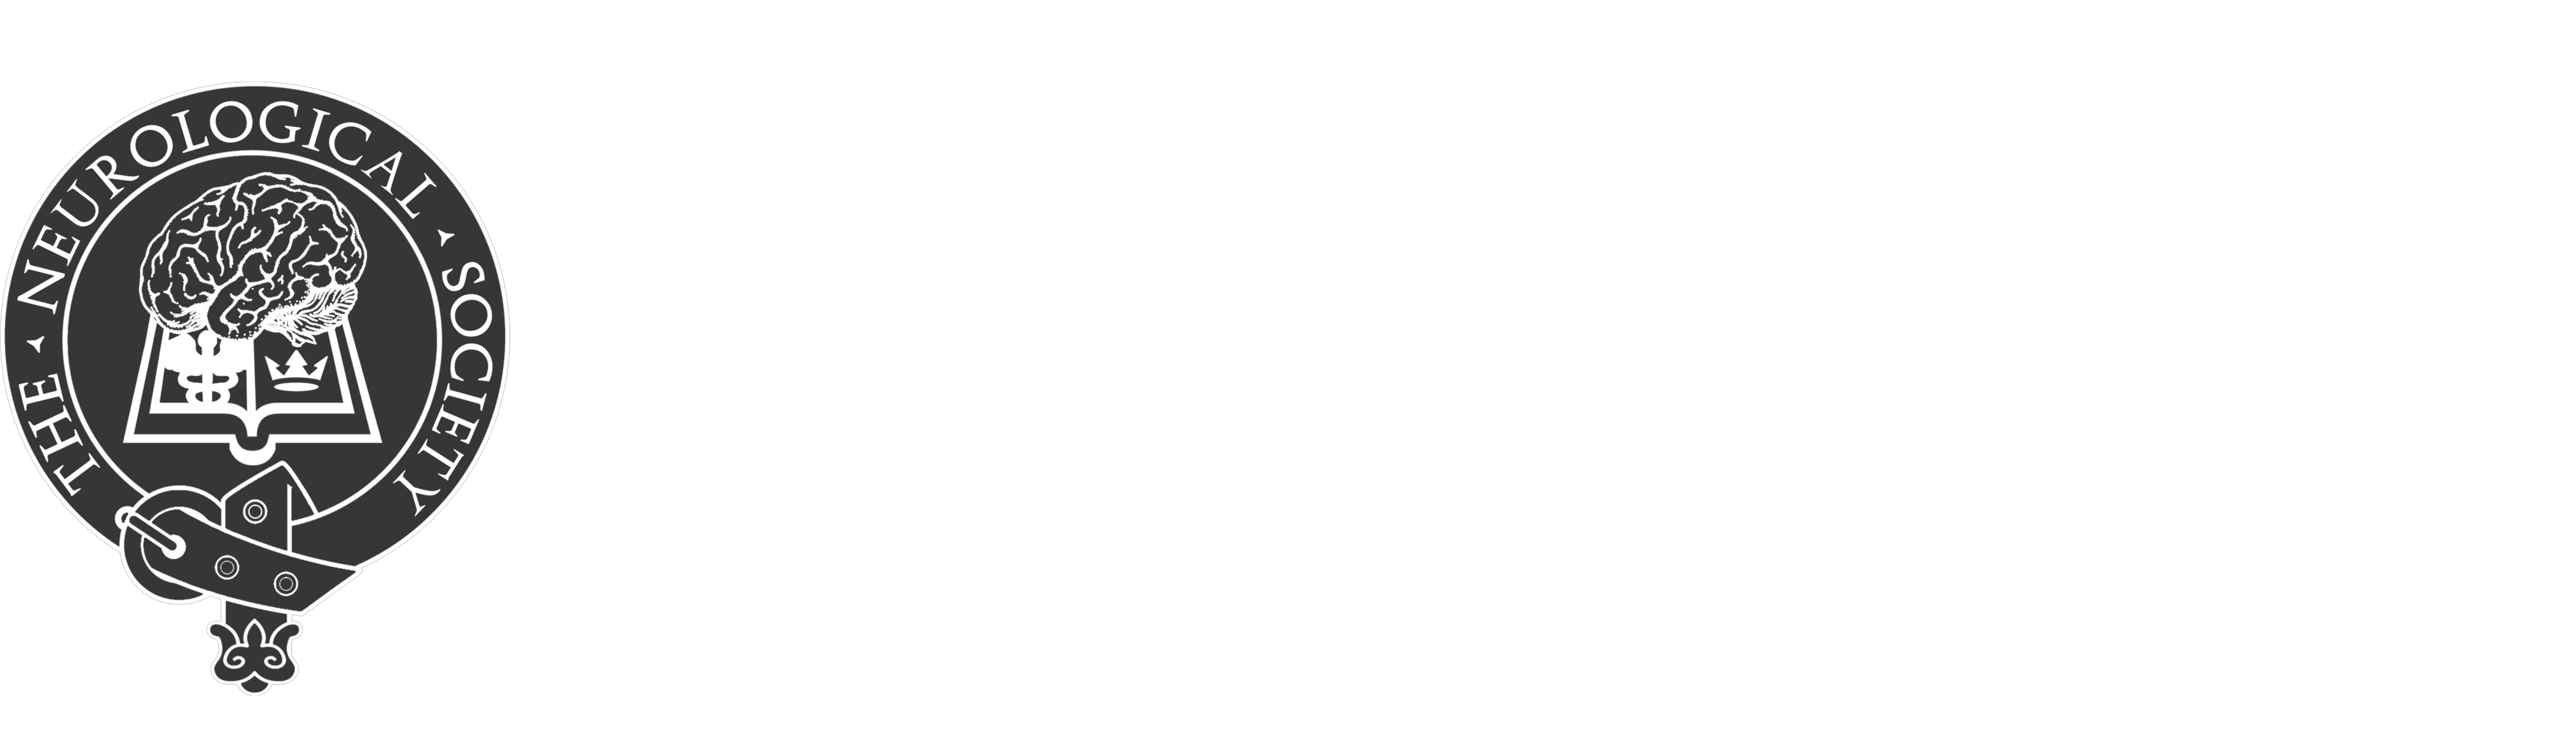 Oxford Neurological Society logo